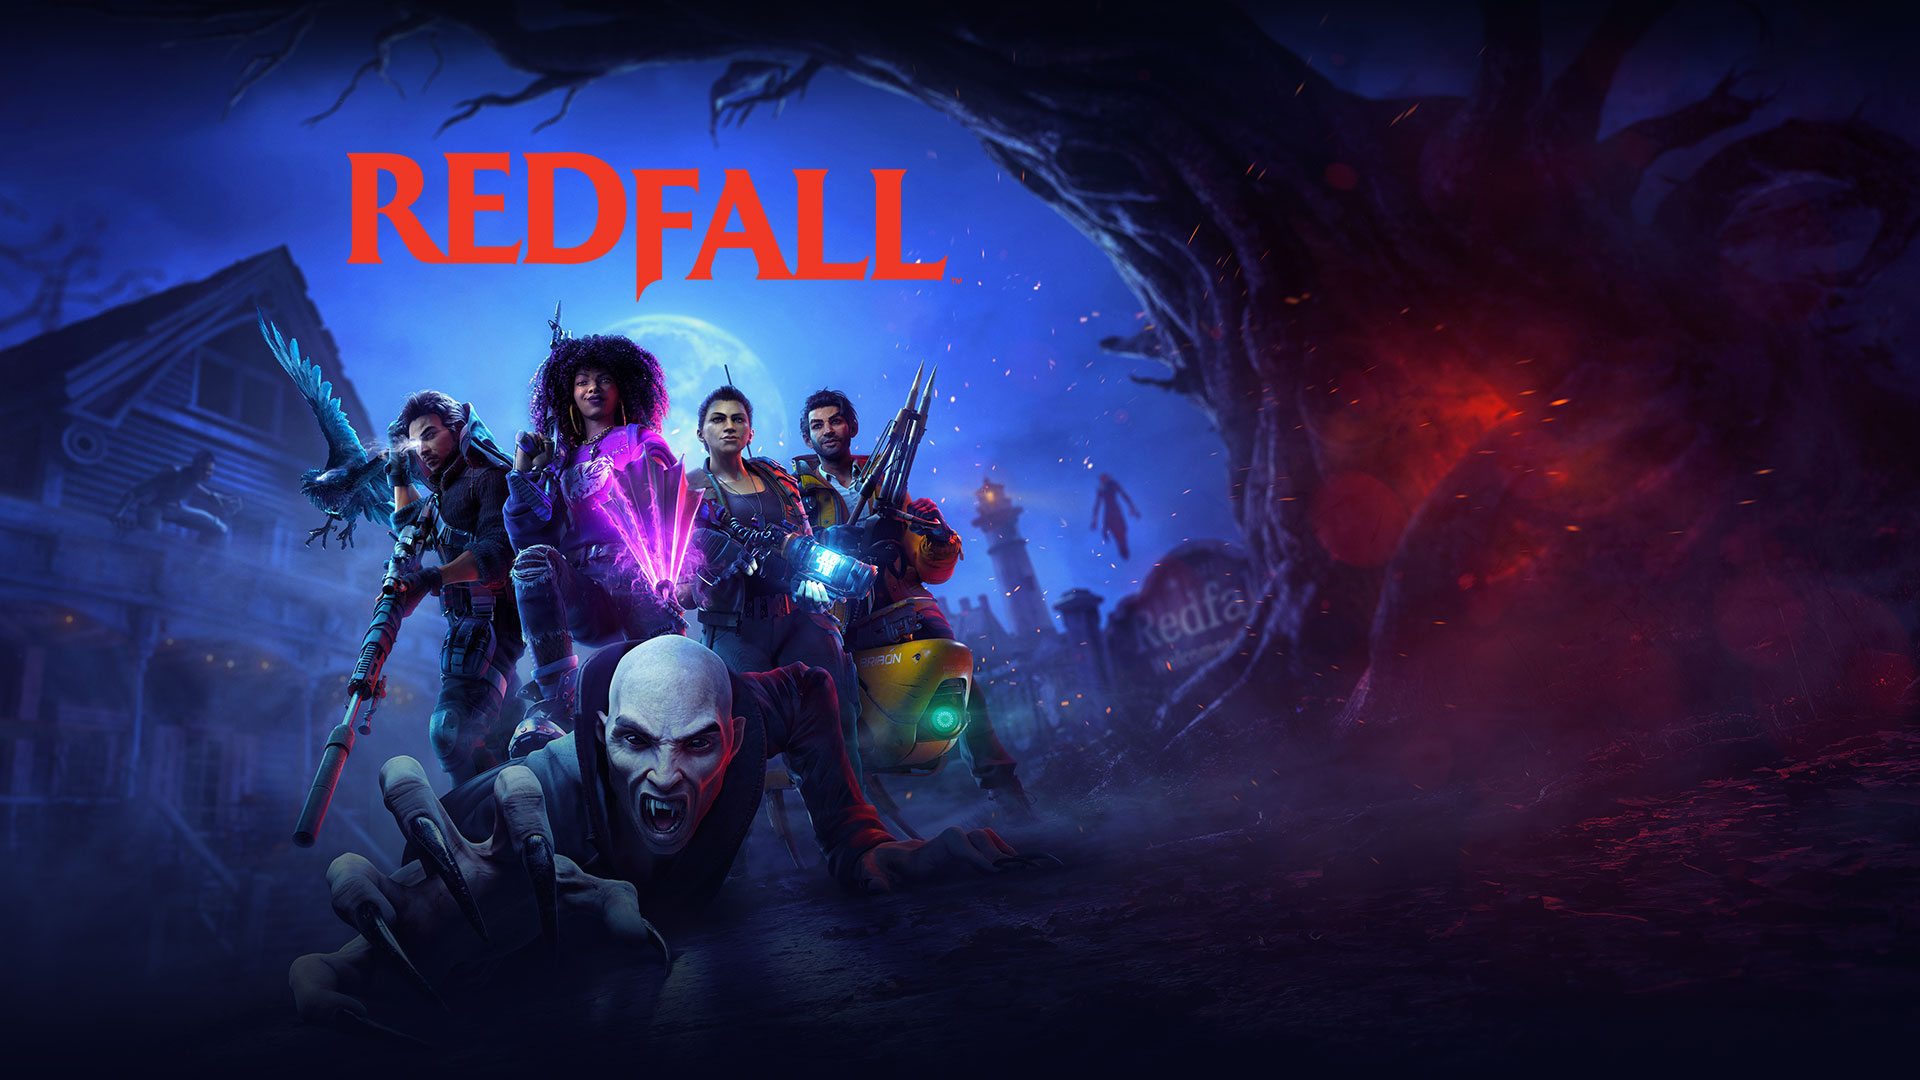 Redfall, ένα βαμπίρ προσπαθεί να ξεφύγει από μια ομάδα χαρακτήρων που στέκονται από πάνω του με τα όπλα τραβηγμένα, έτοιμοι να το εξαφανίσουν.